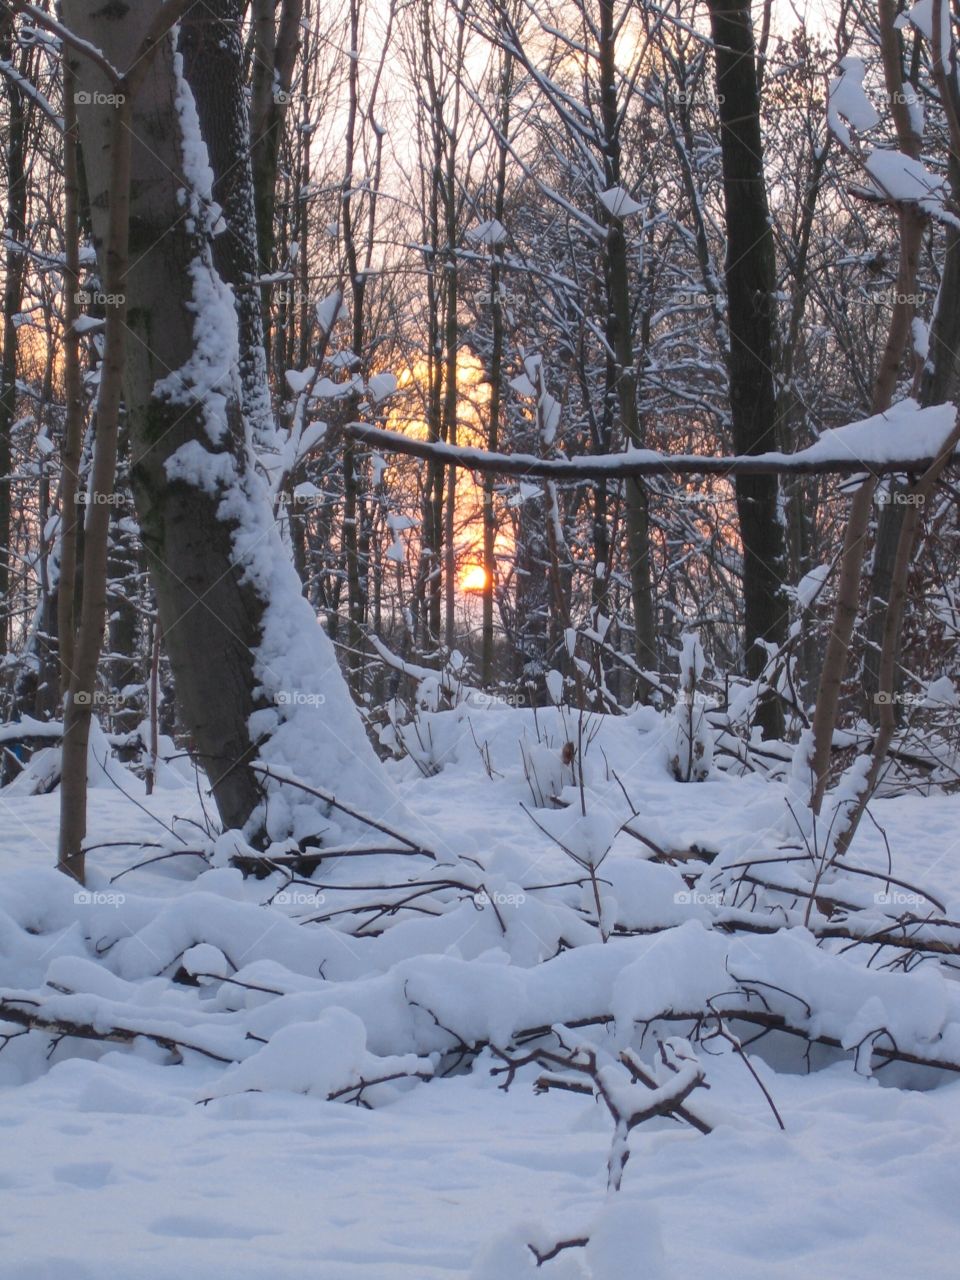 Snow & sunset 🌅, winter light